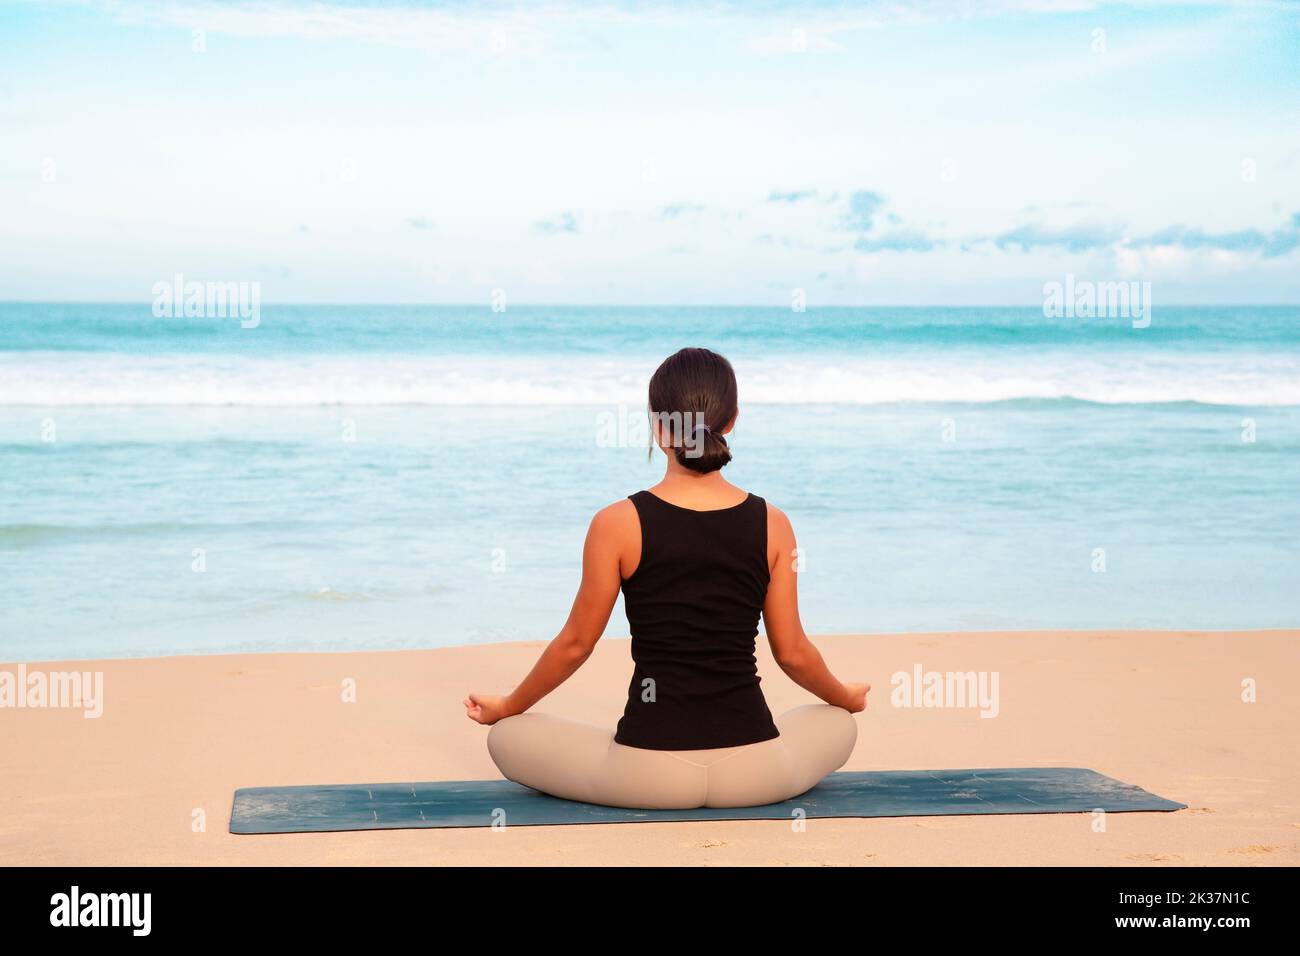 woman practicing yoga at seashore of tropic beach,young woman meditating at the beach make yoga exercises Stock Photo